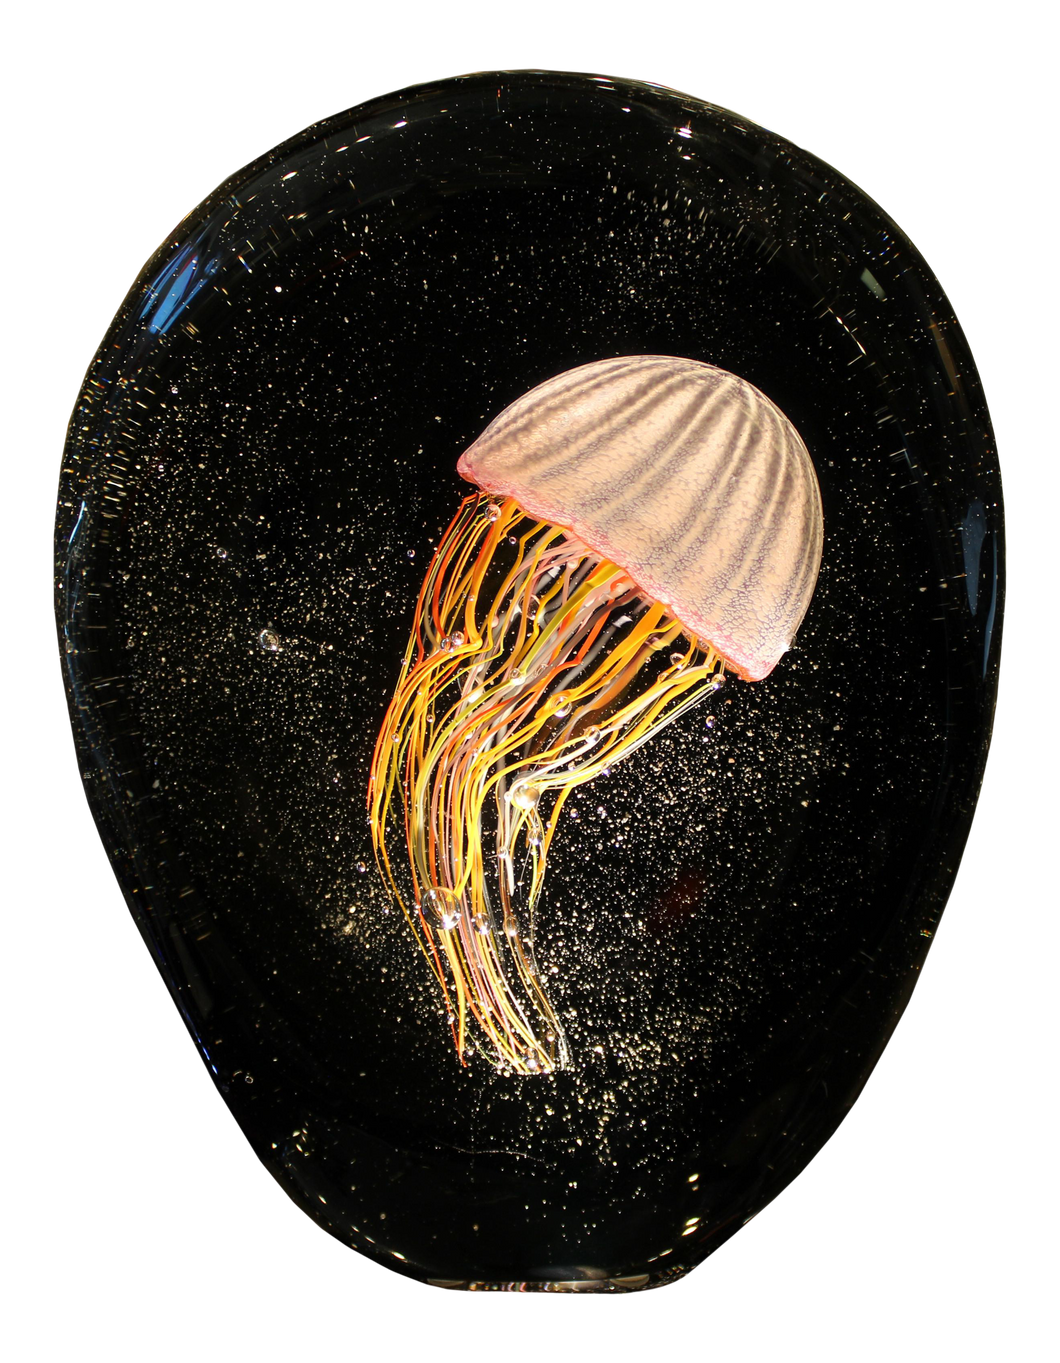 Murano Glass Aquarium by Costantini